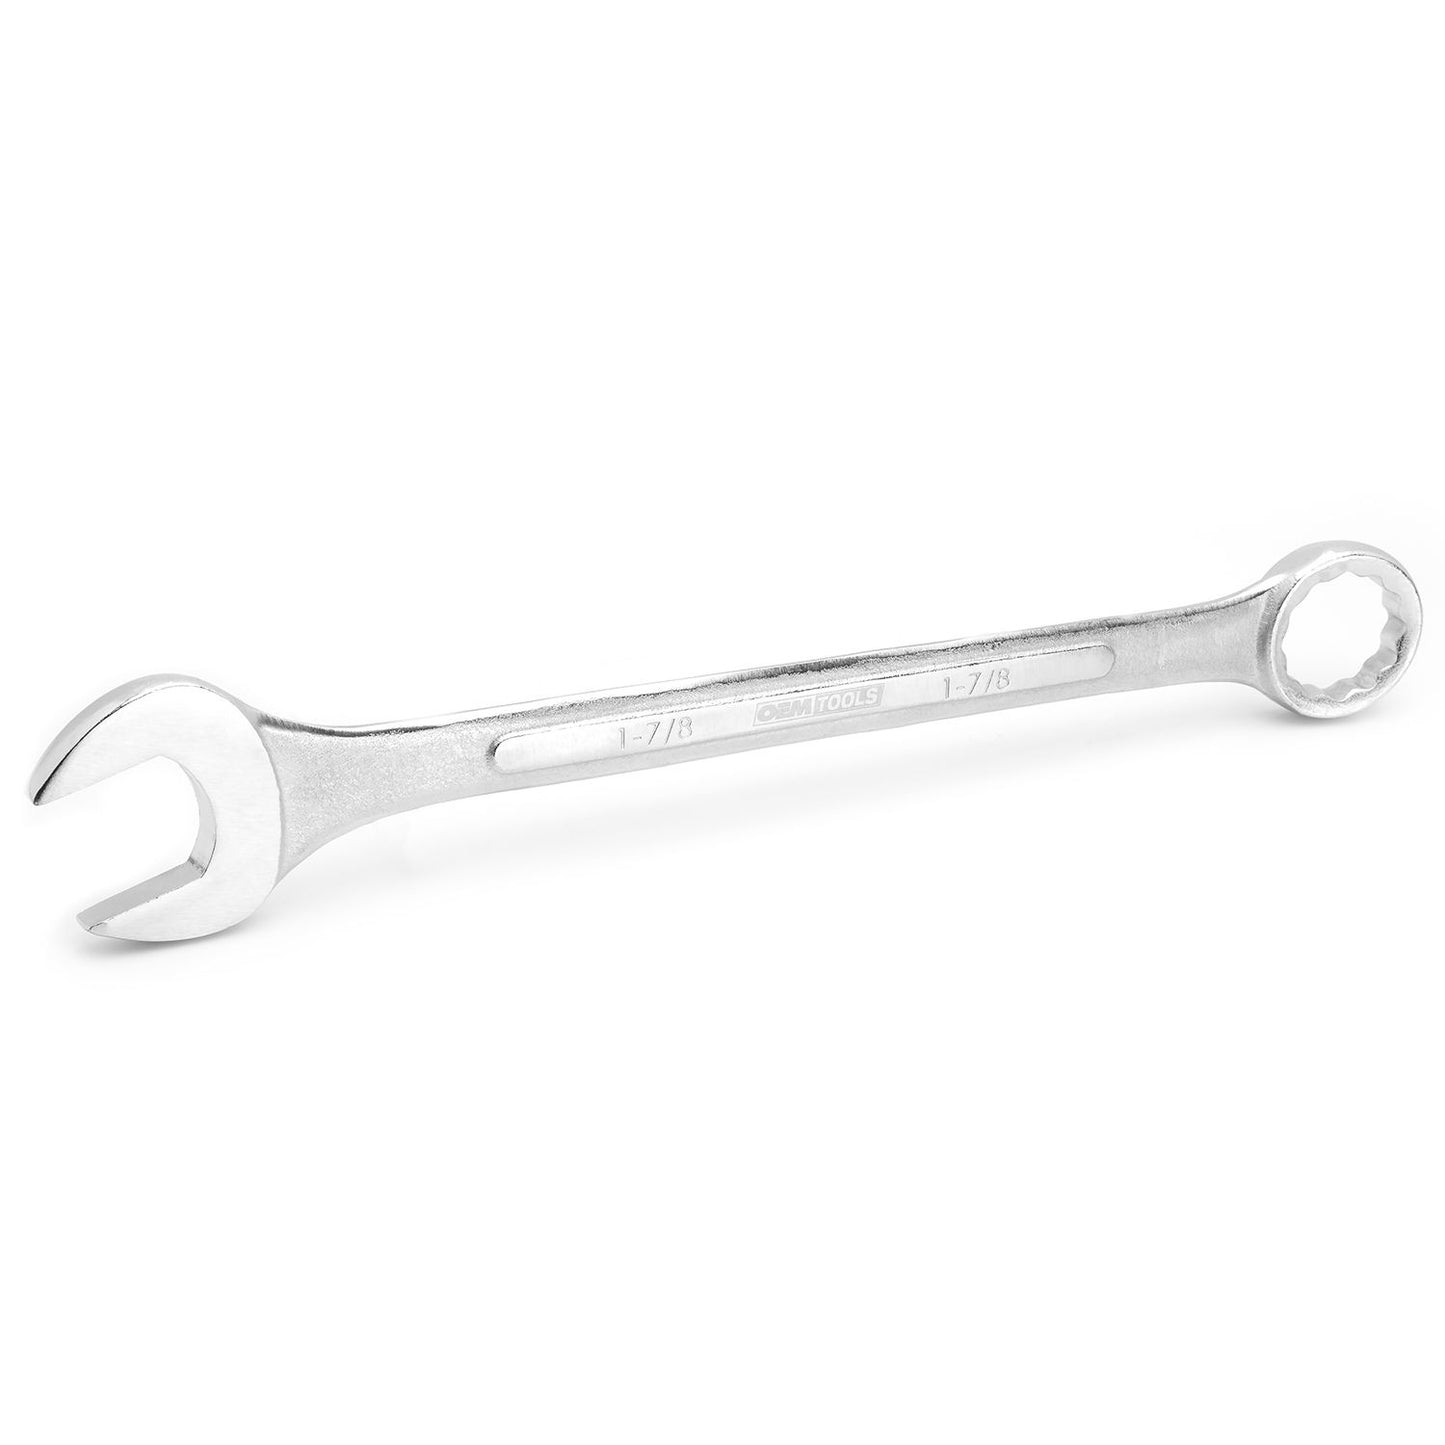 OEM Tools 22111 1- 7/8 Jumbo wrench